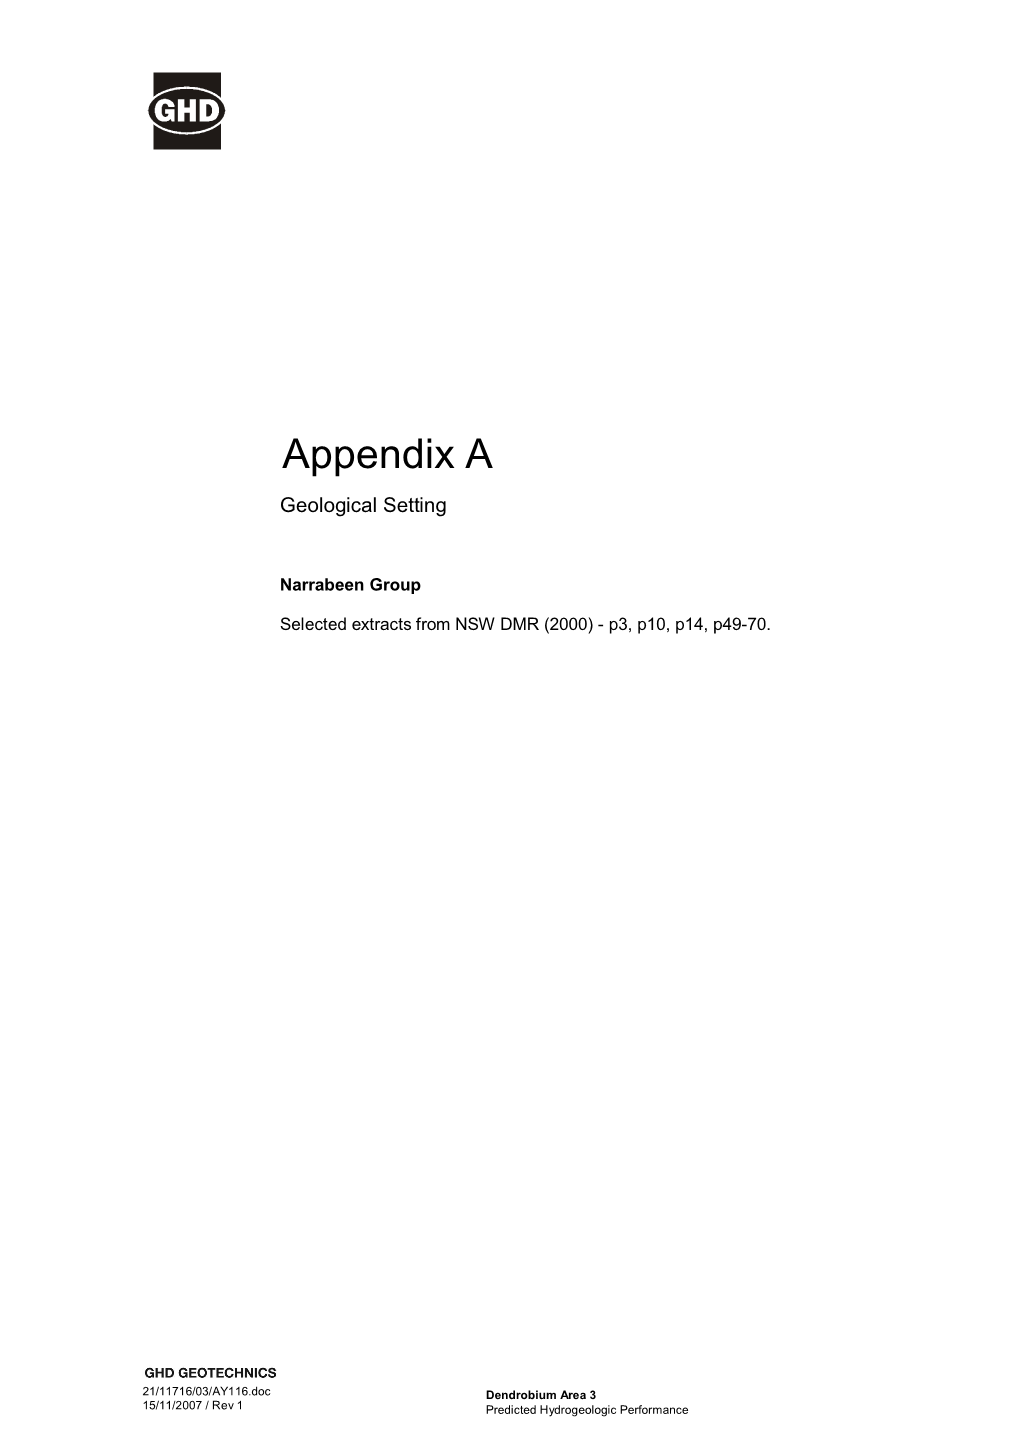 Appendix a Geological Setting